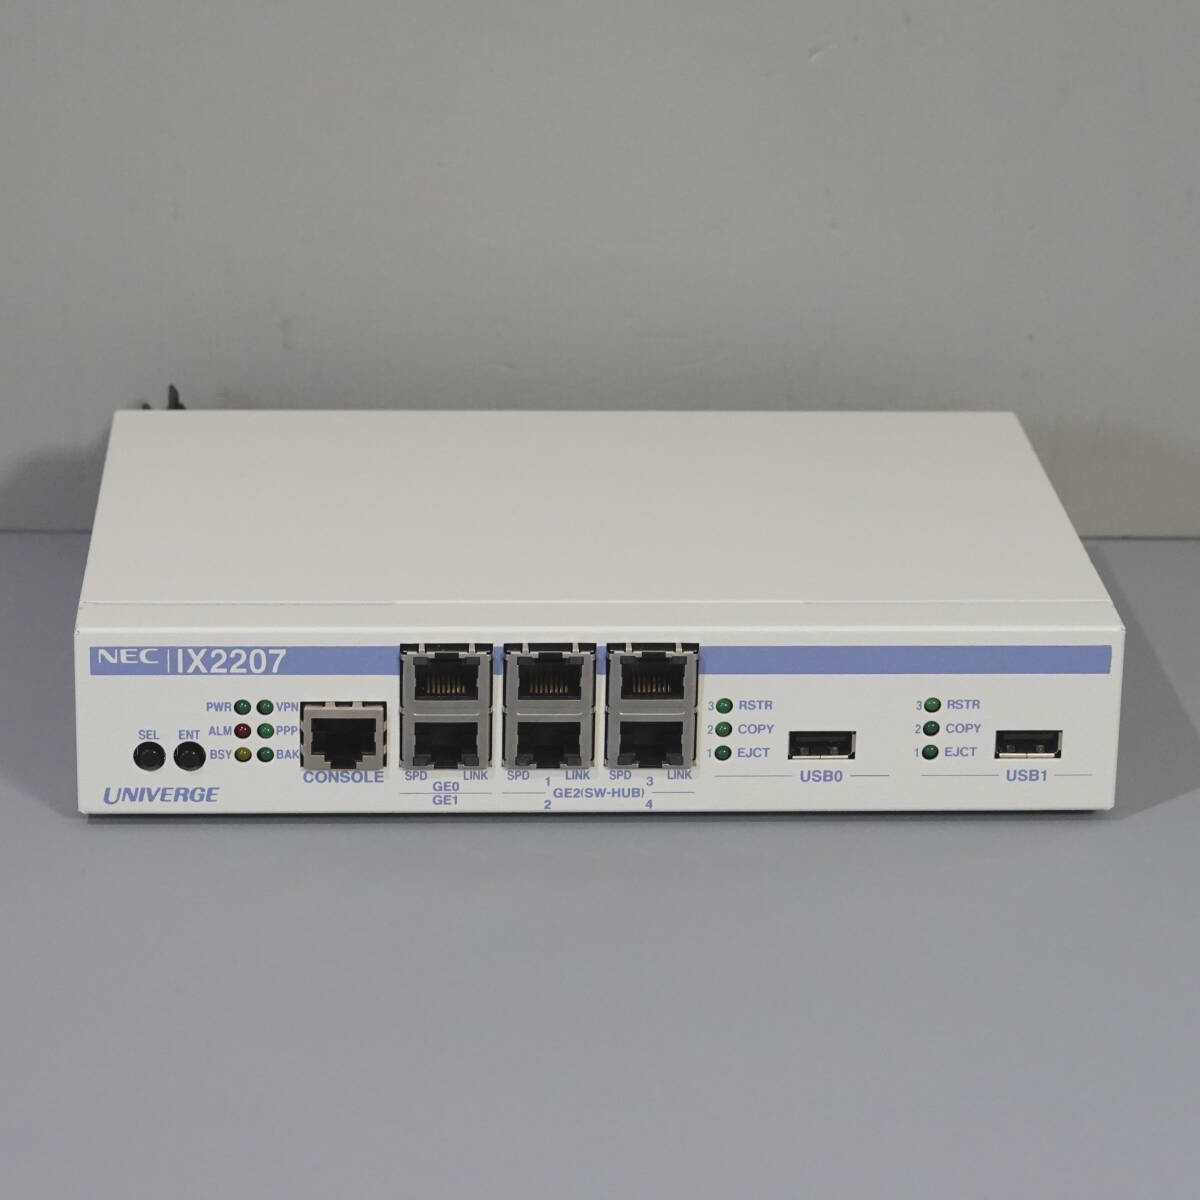 NEC VPN対応高速アクセスルータ UNIVERGE IX2207 ソフトウェア Ver. 10.8.24 【美品・純正電源ケーブル付属】_本体前面